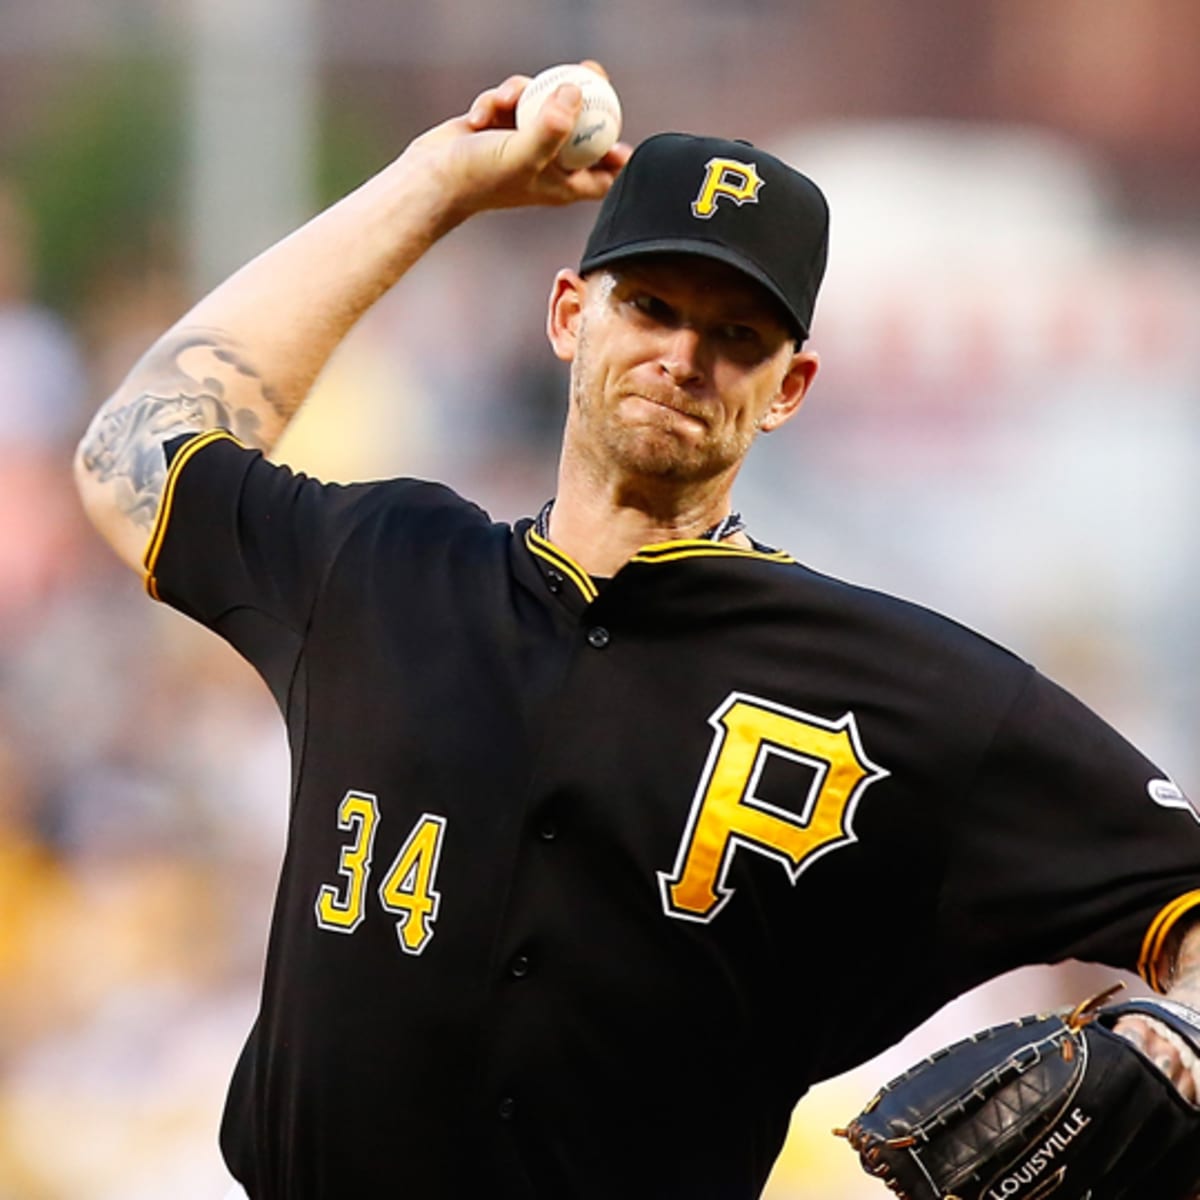 Pittsburgh Pirates place AJ Burnett on disabled list - Sports Illustrated